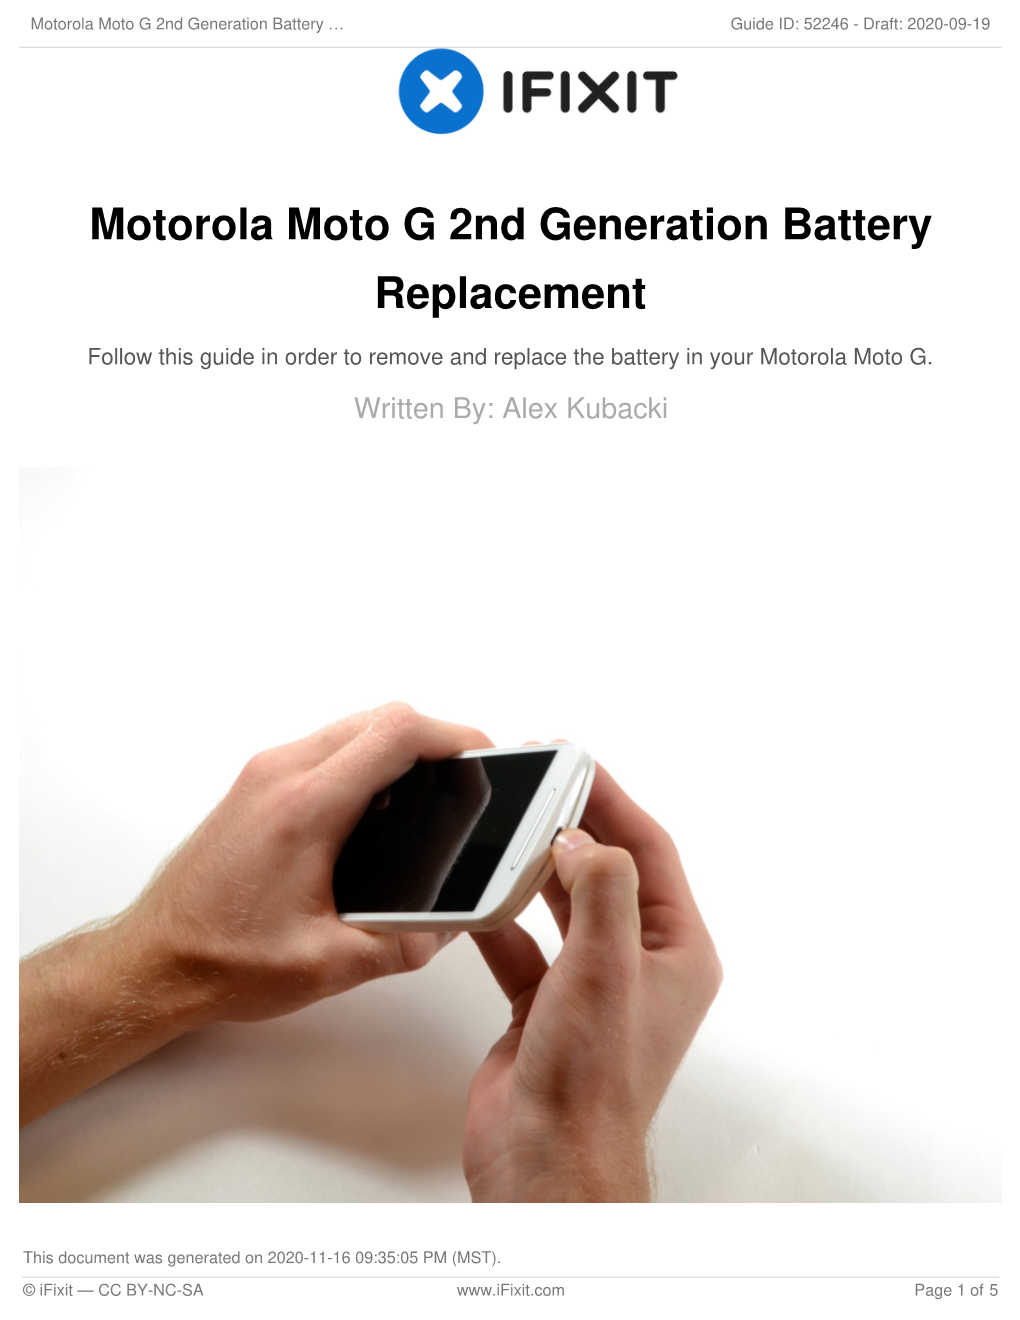 Motorola Moto G 2Nd Generation Battery Replacement